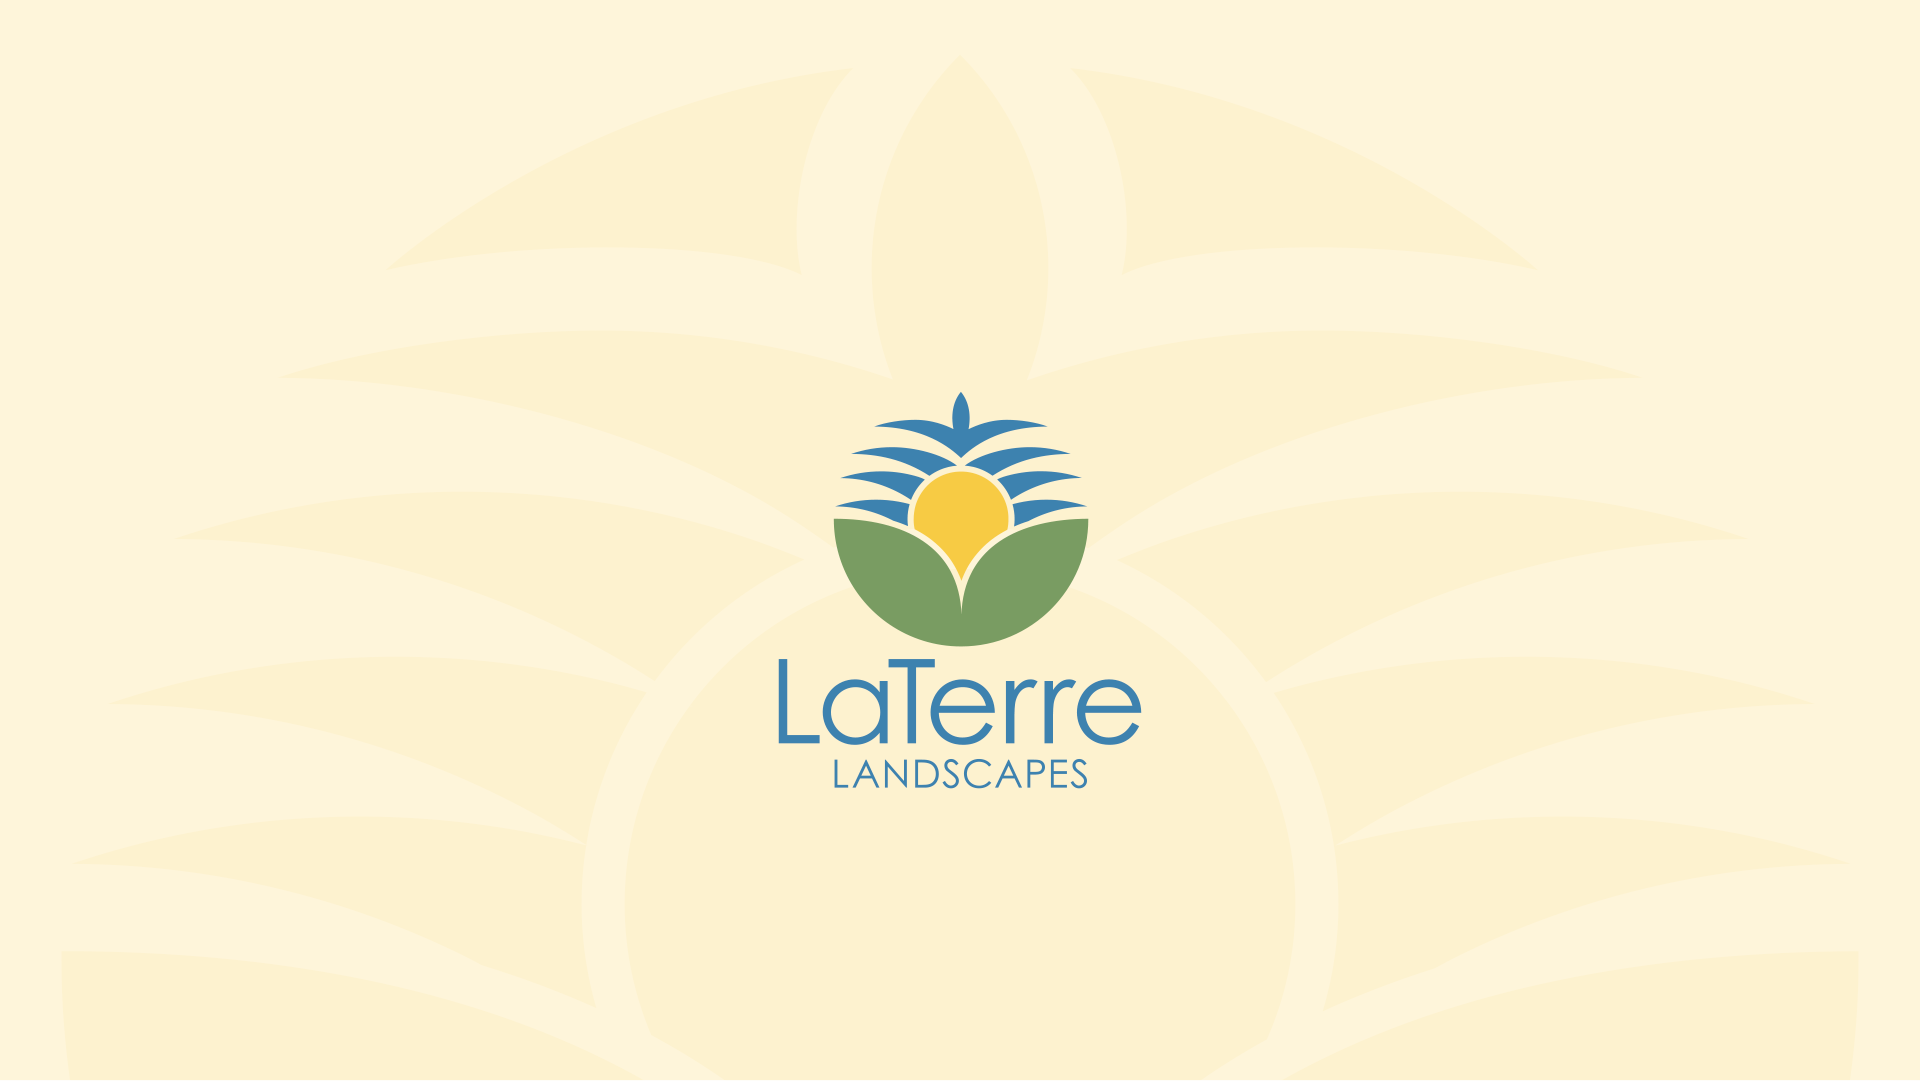 LaTerre Landscapes